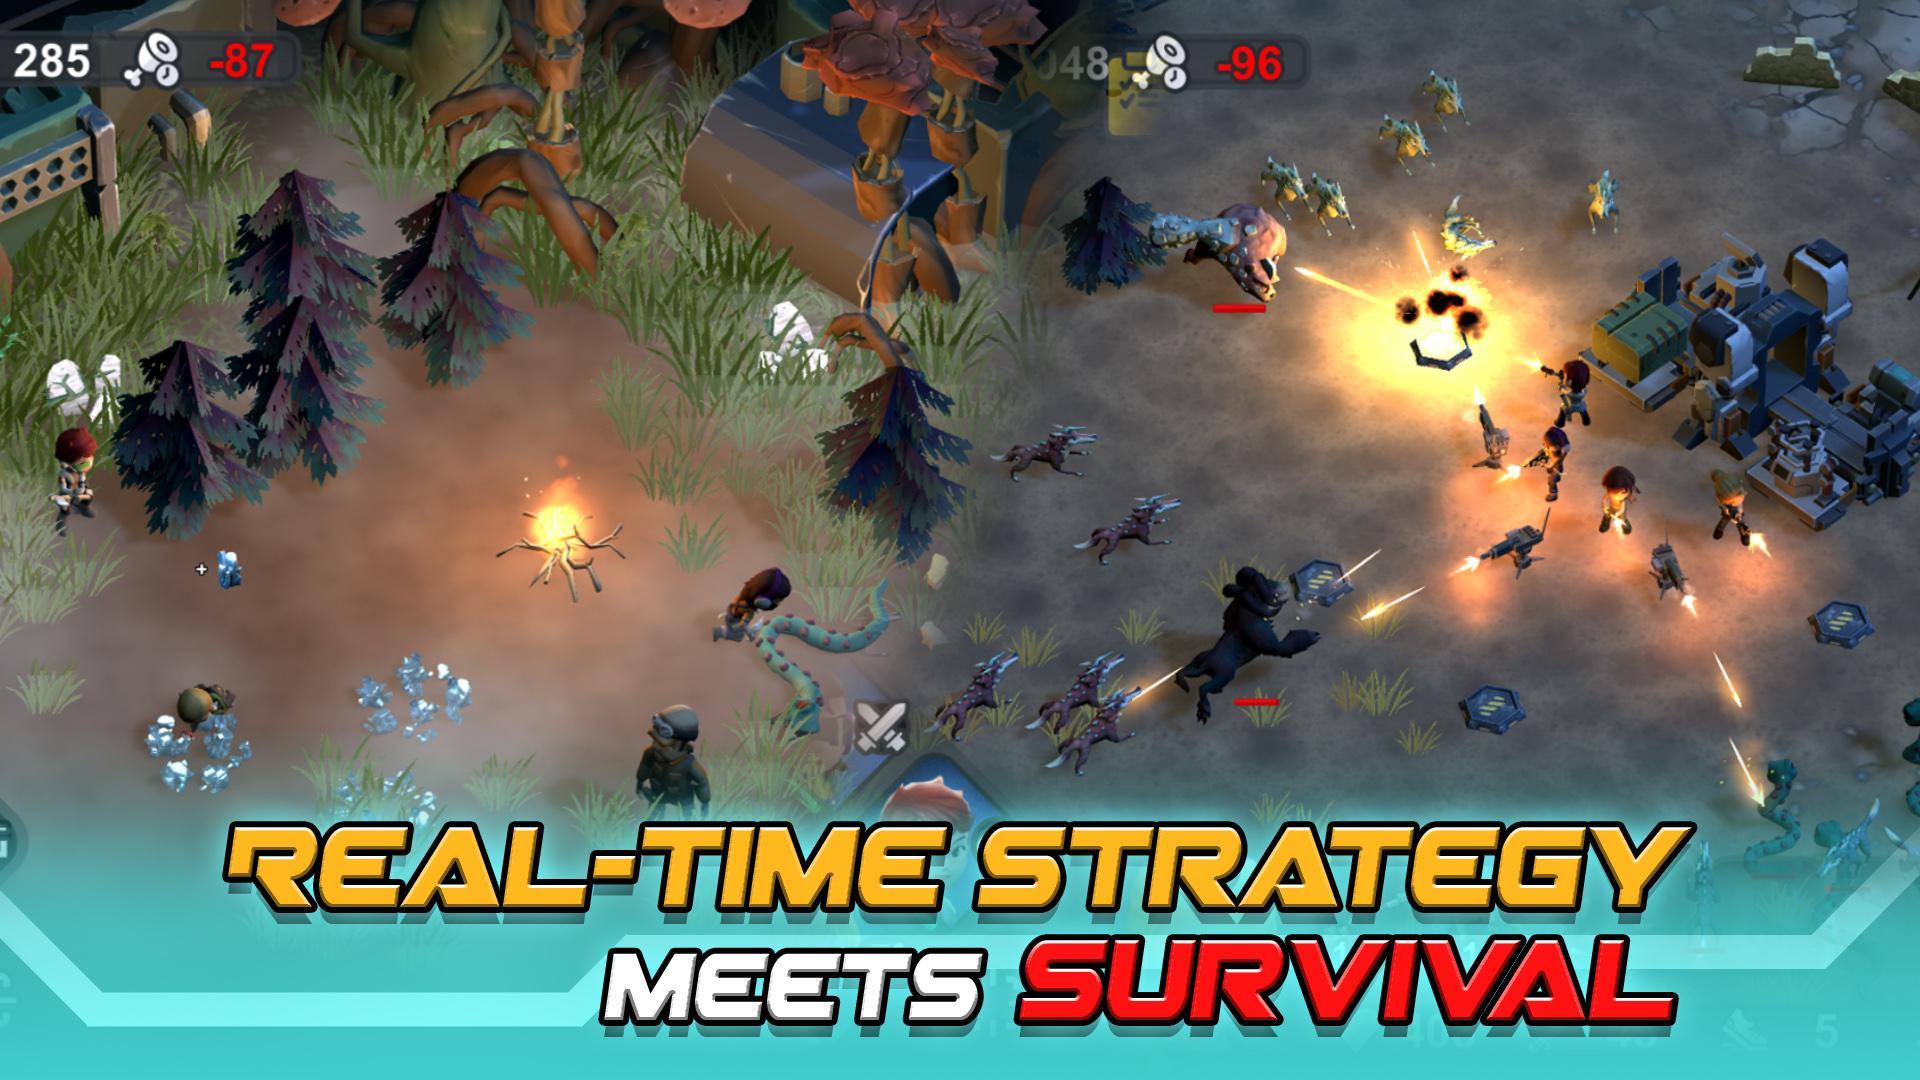 Strange World Offline Survival Rts Game For Android Apk Download